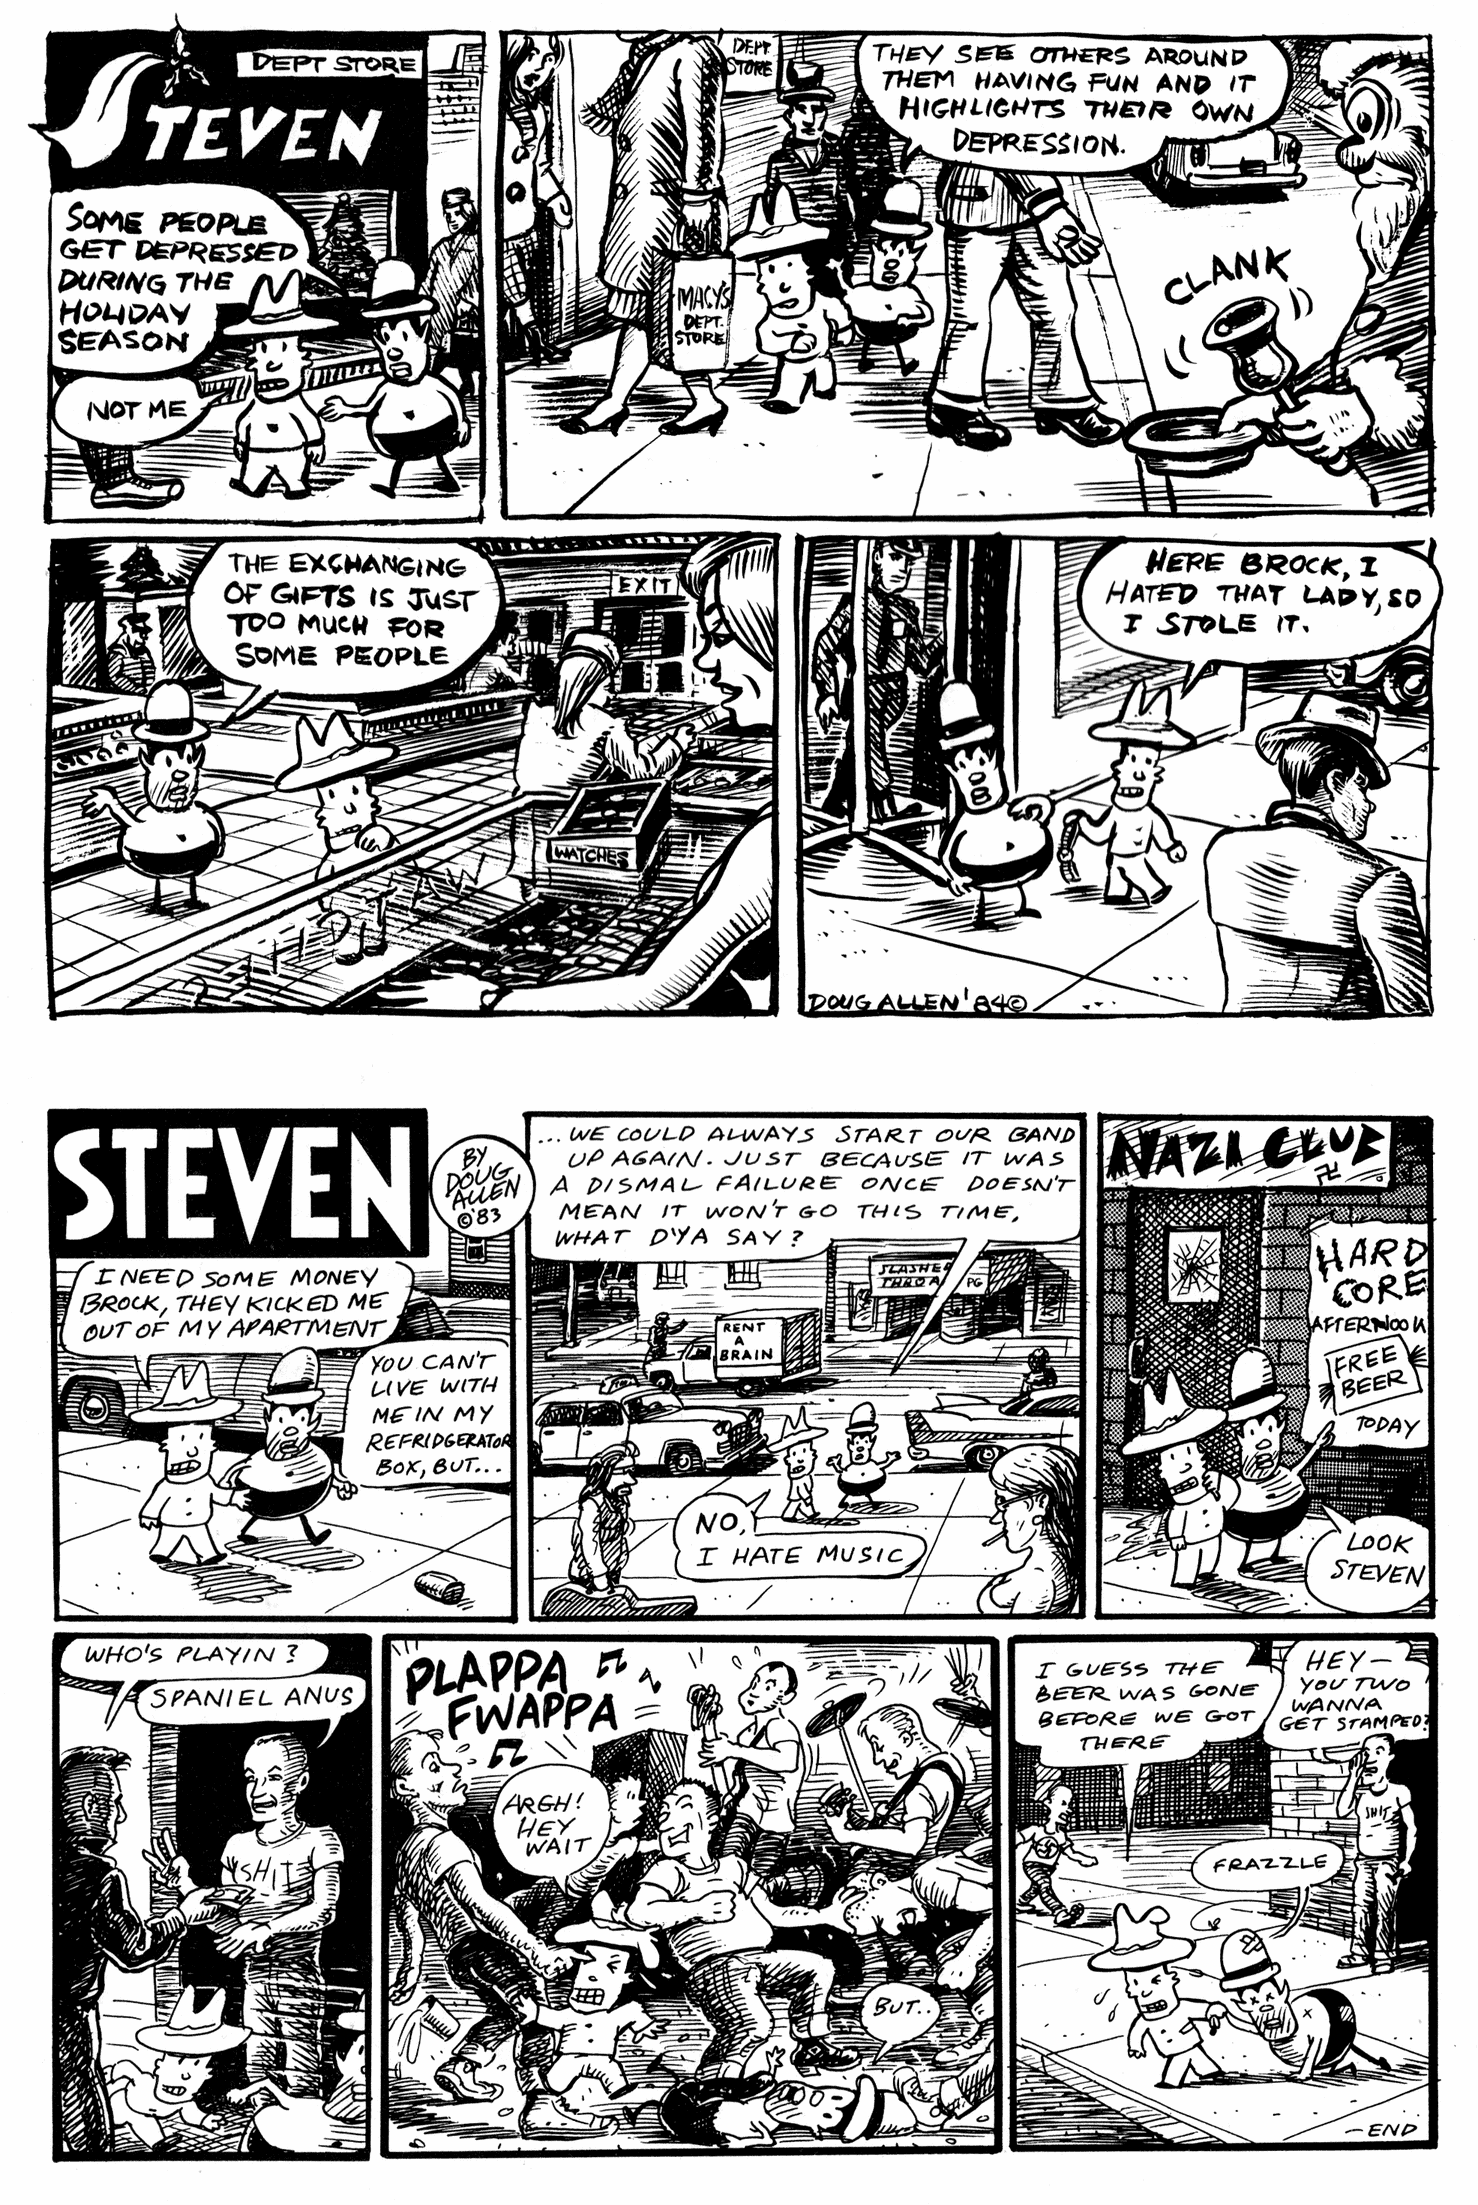 Read online Steven comic -  Issue #1 - 19